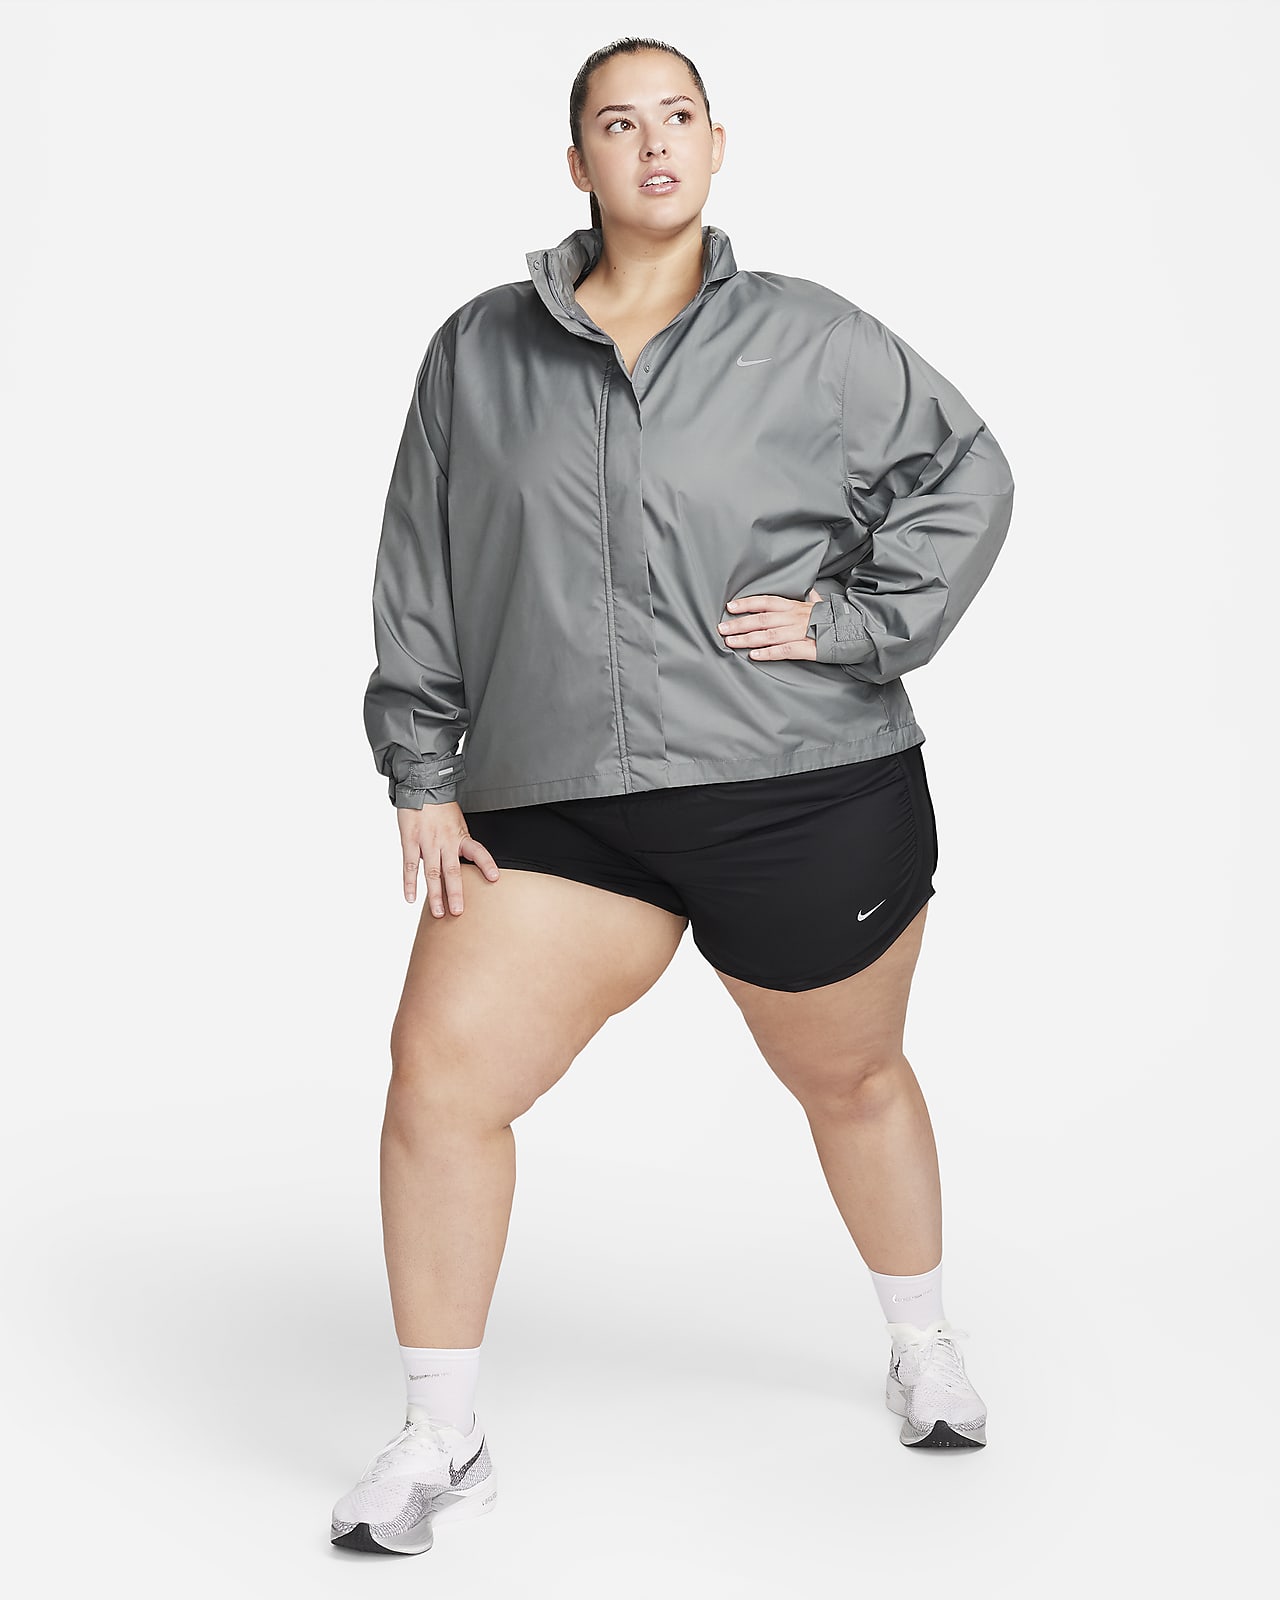 Nike Fast Running Women\'s Jacket (Plus Size). Repel